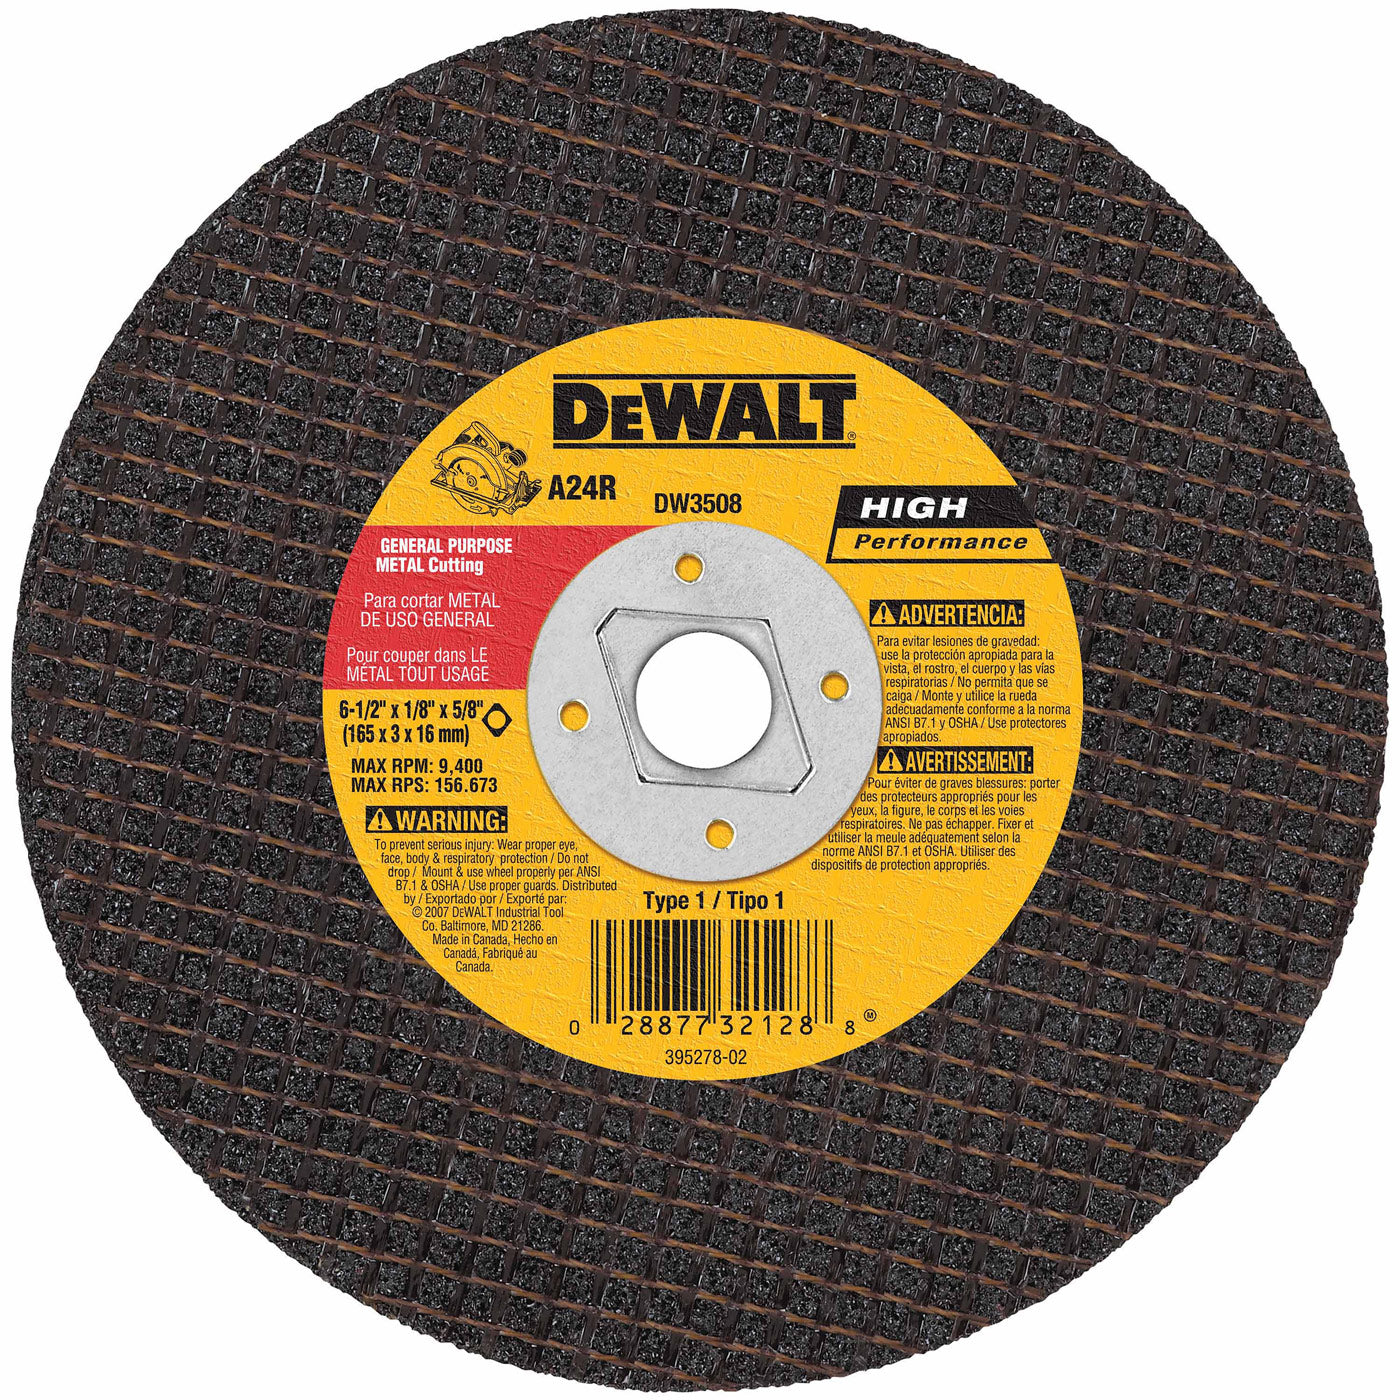 DeWalt DW3508 6-1/2" x 1/8" Metal Abrasive Saw Blade